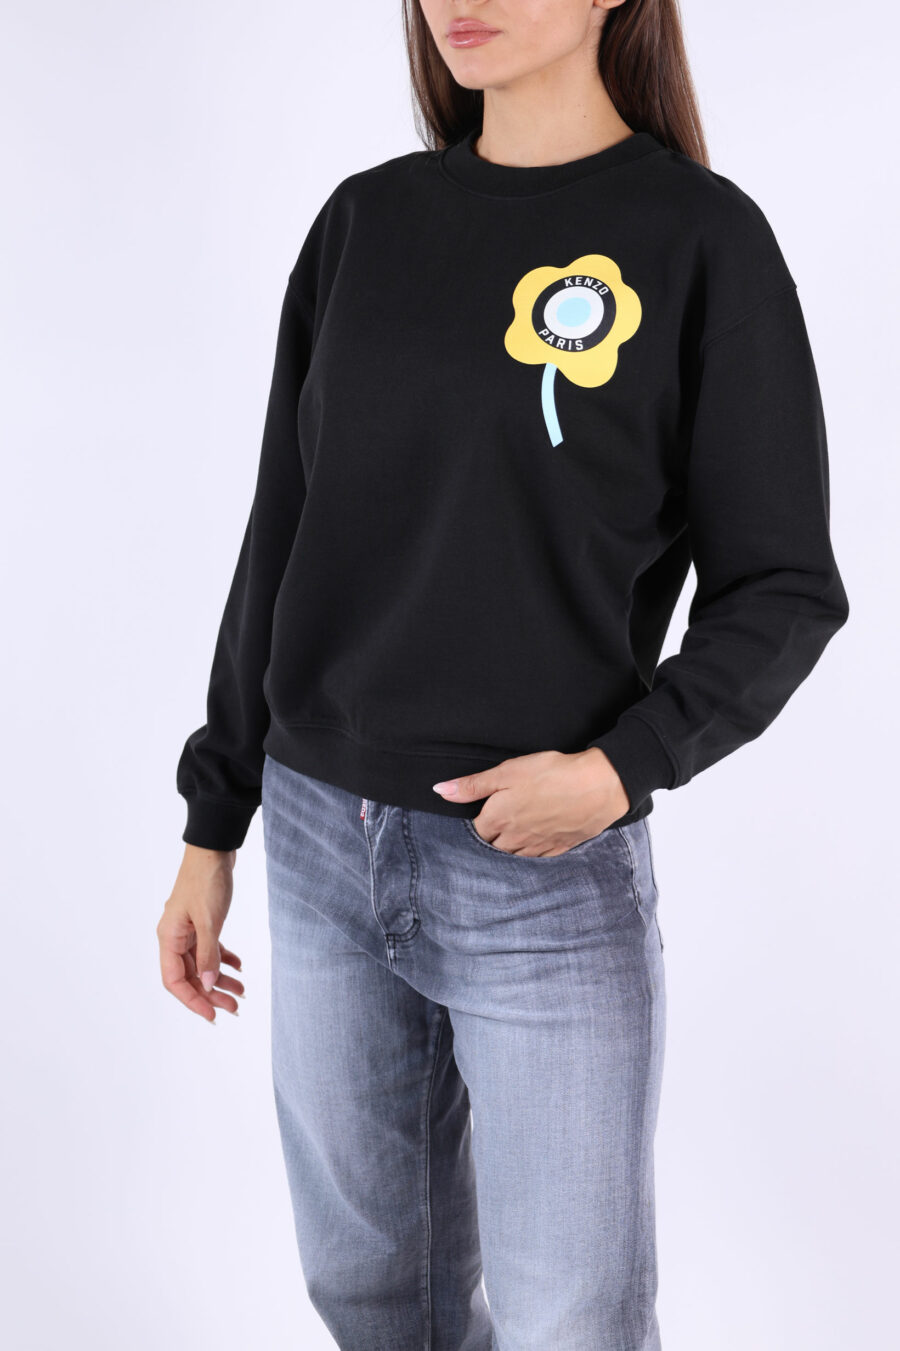 Schwarzes Sweatshirt mit gelbem "kenzo target" Logo - 361223054662202012